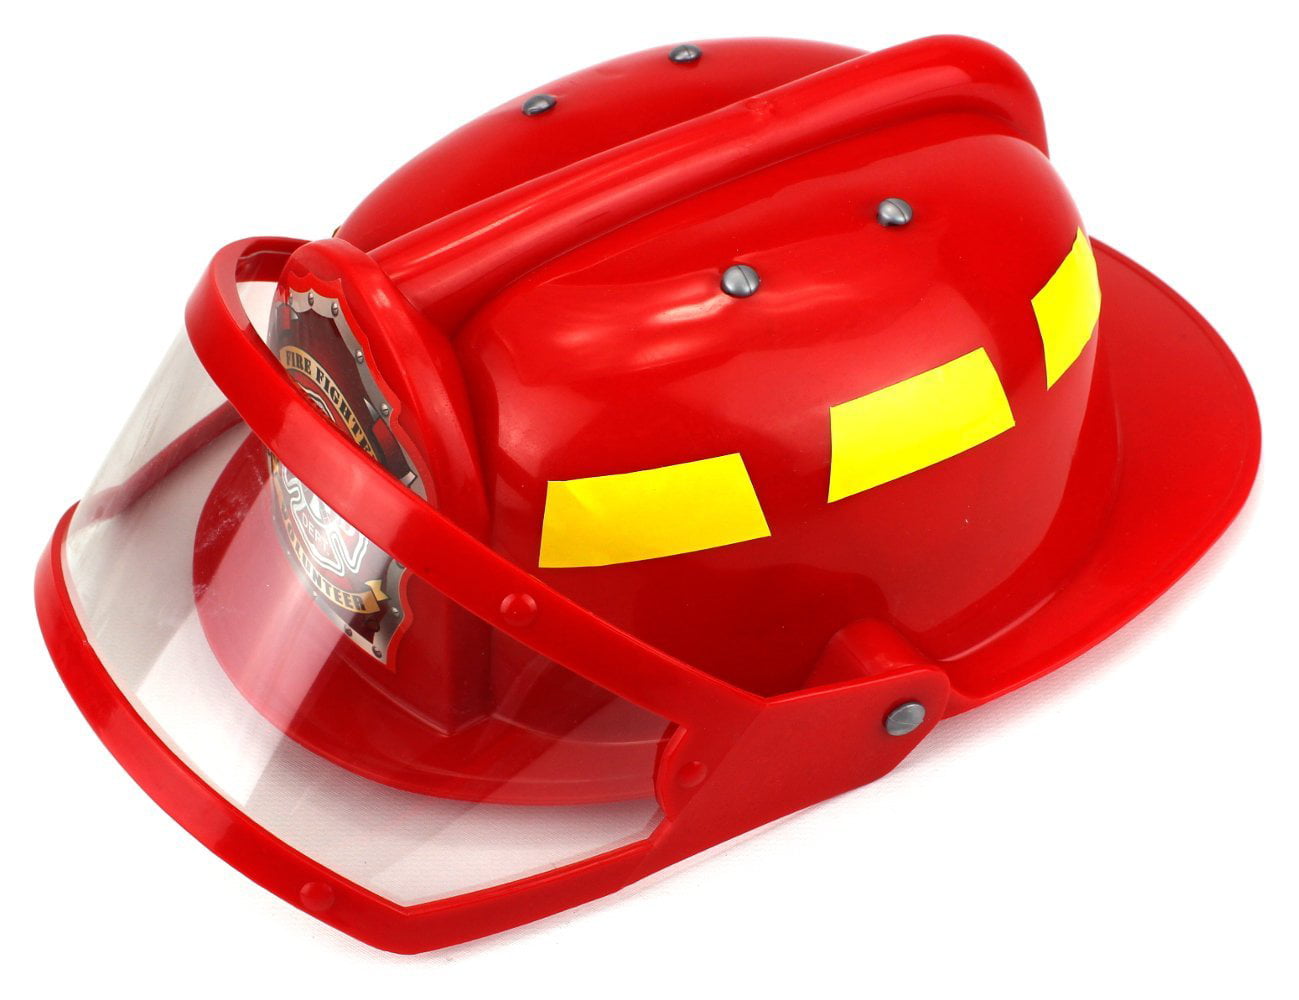 Texpress Deluxe Led Light Up Kids Fireman Hat Hard Plastic Red